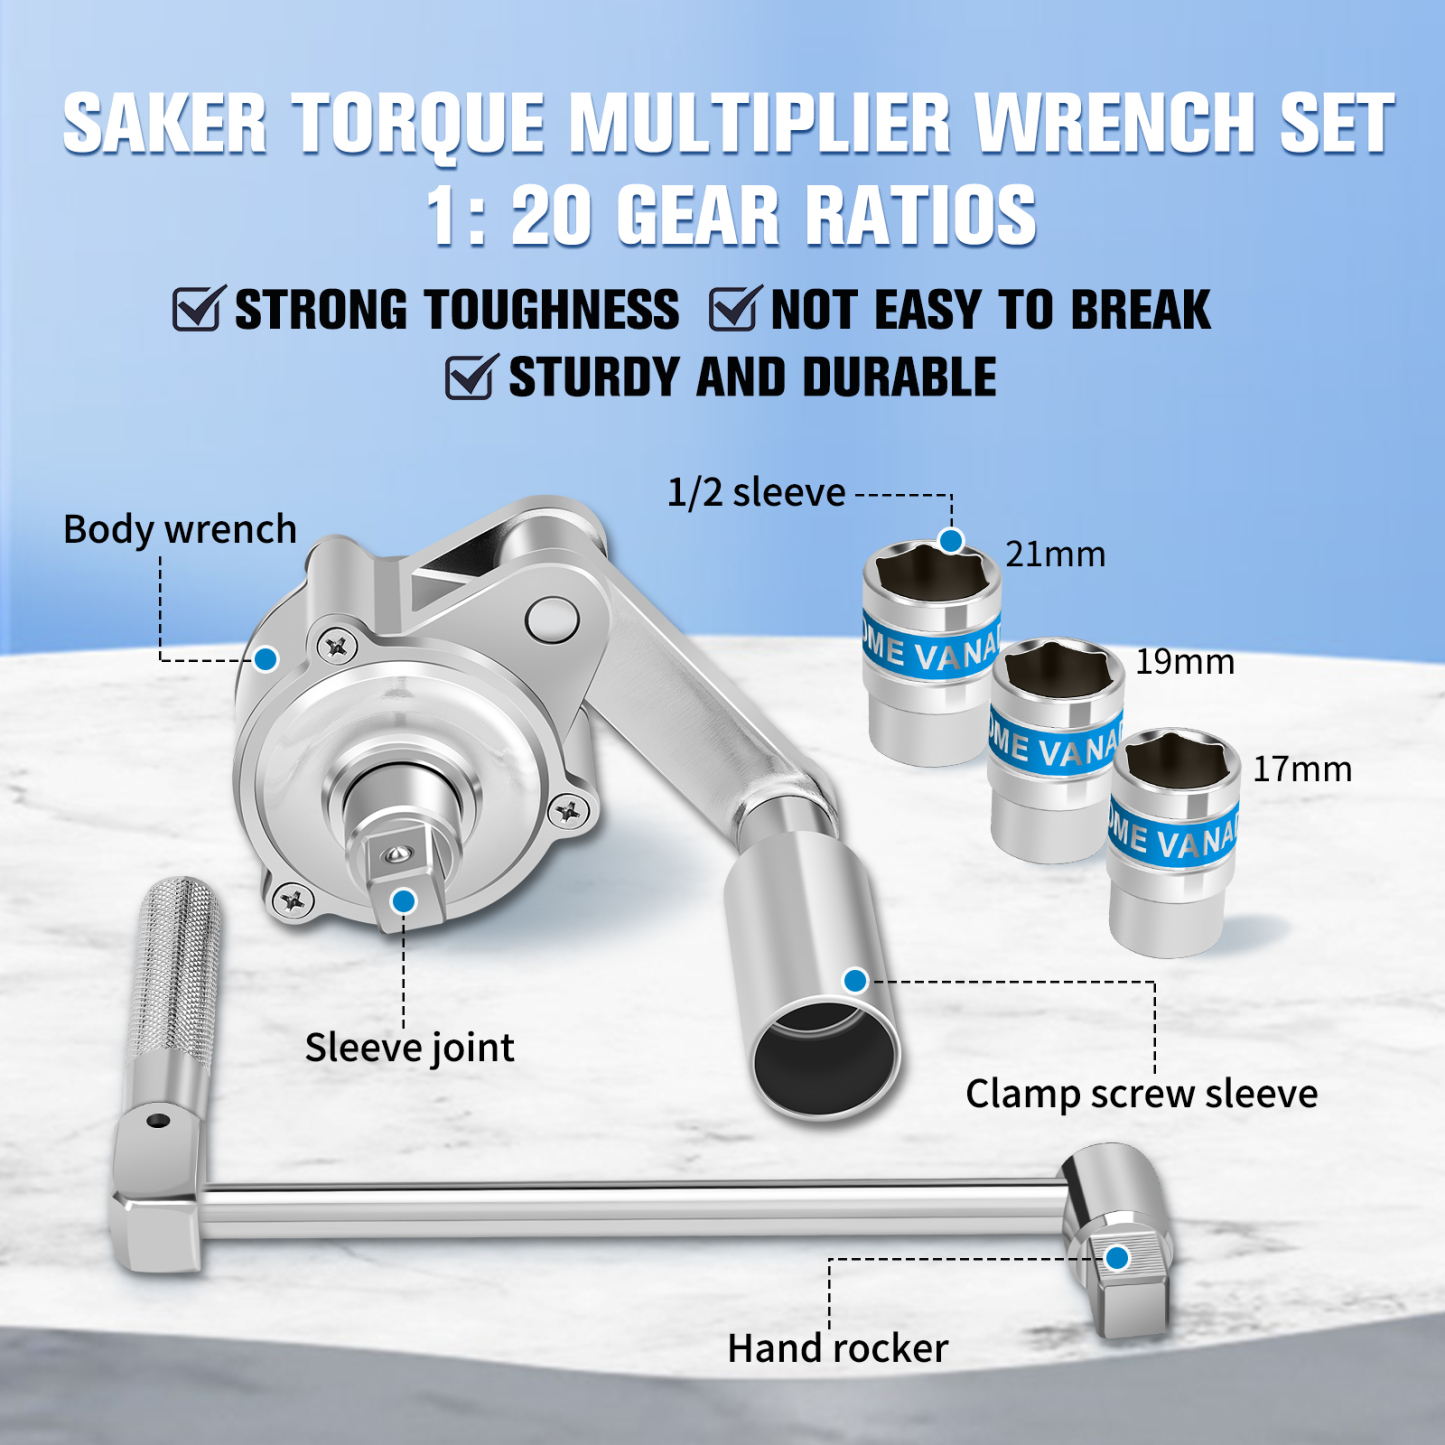 (🎯 HOT SALE- SAVE 48% OFF) Torque Multiplier Wrench Set